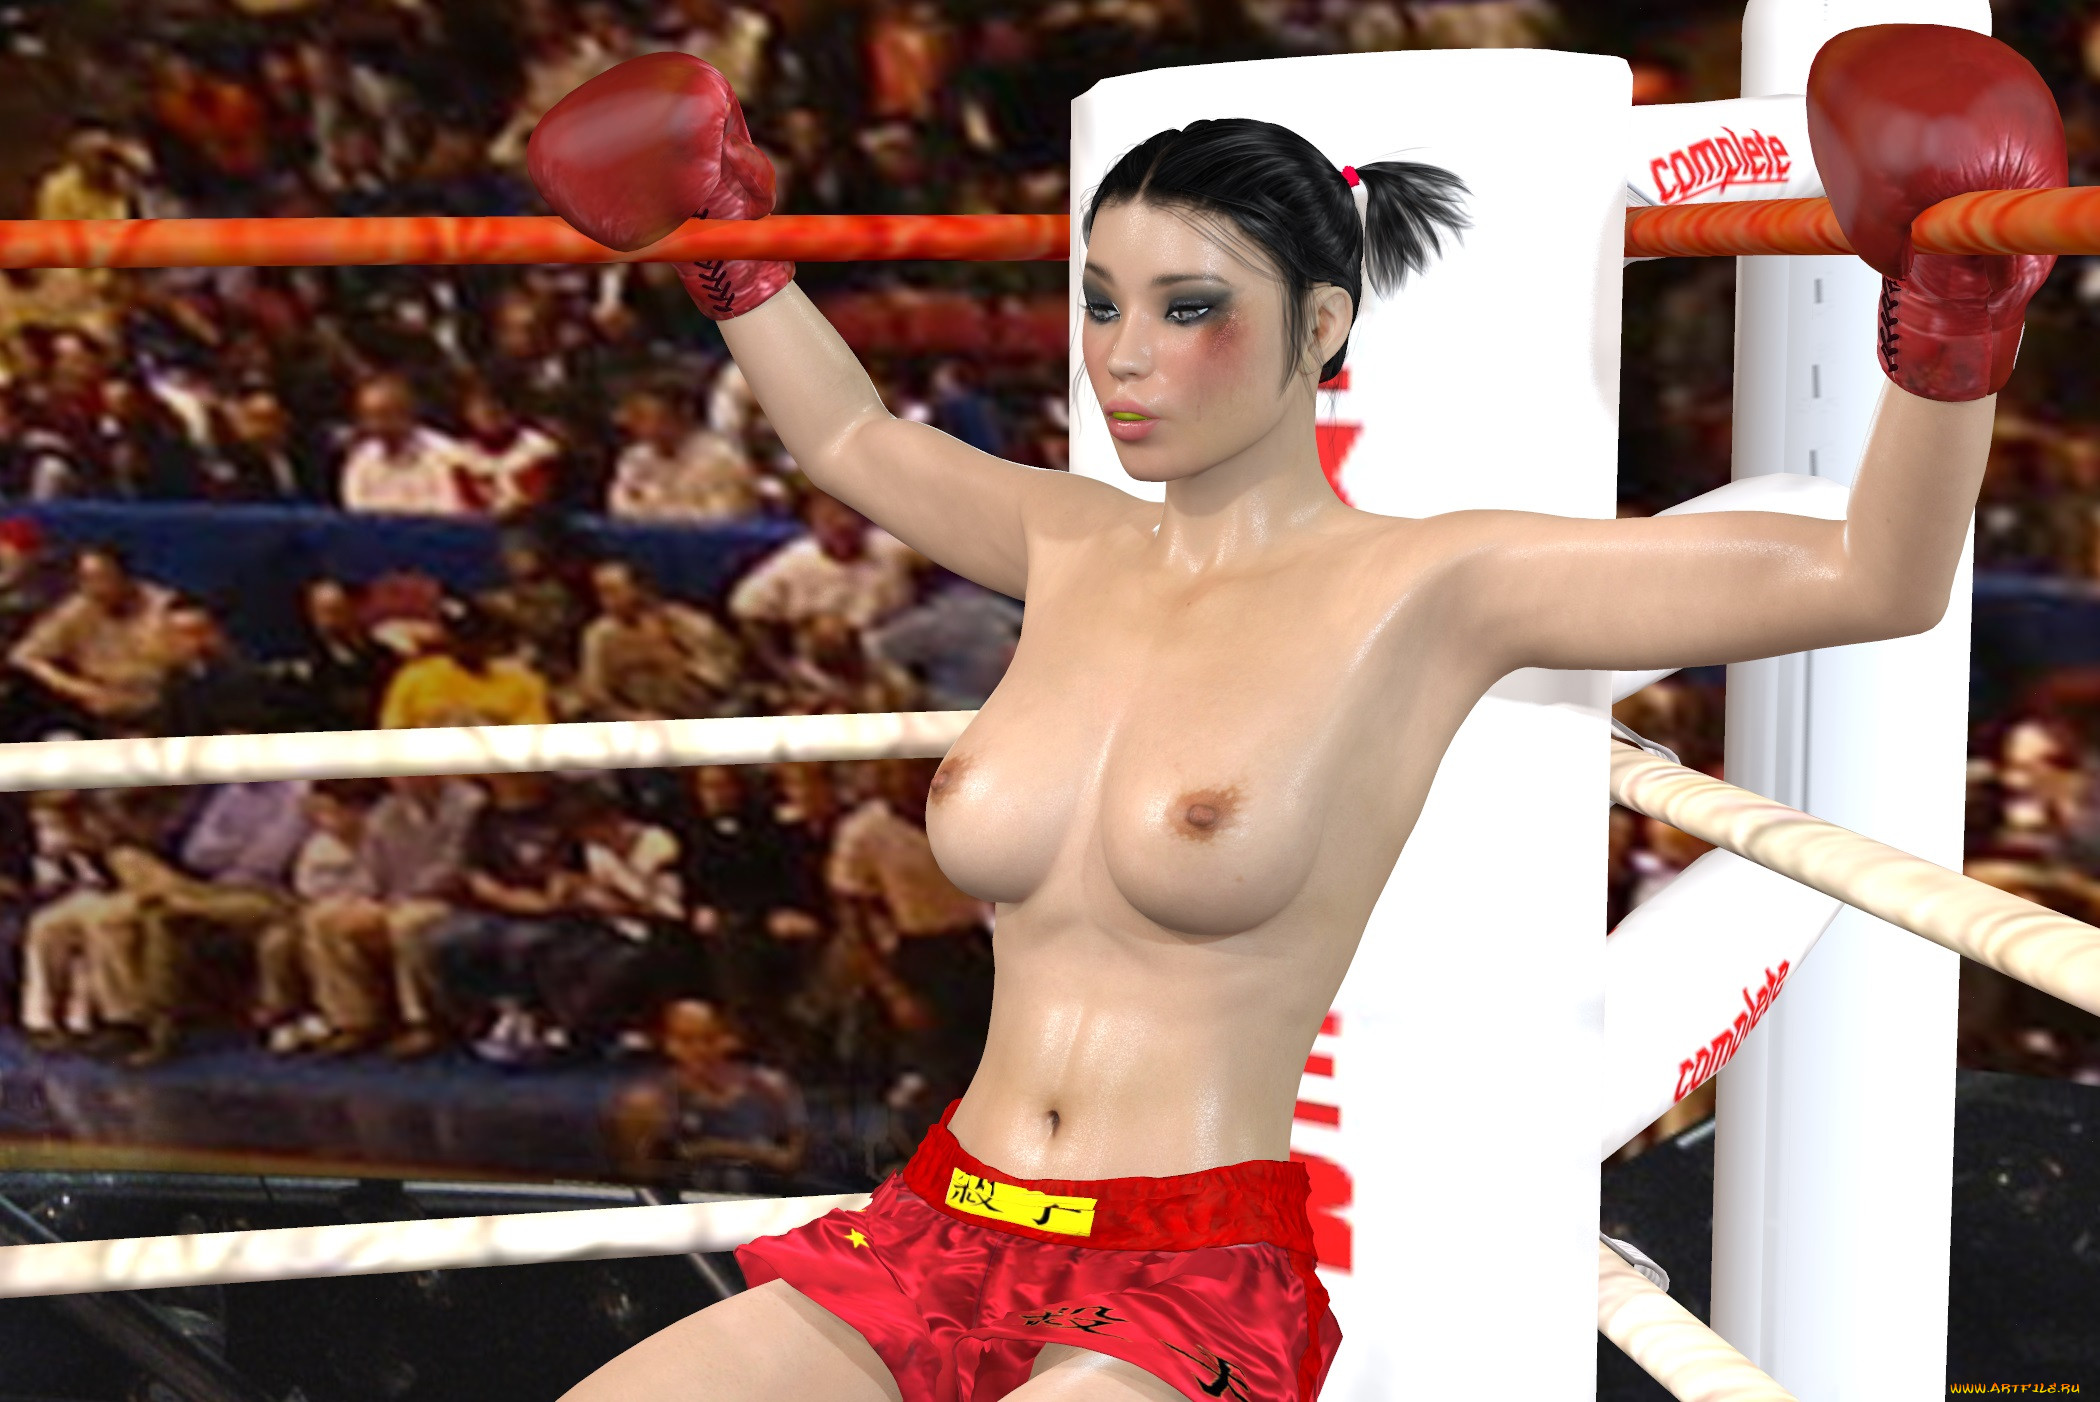 Erotic boxing